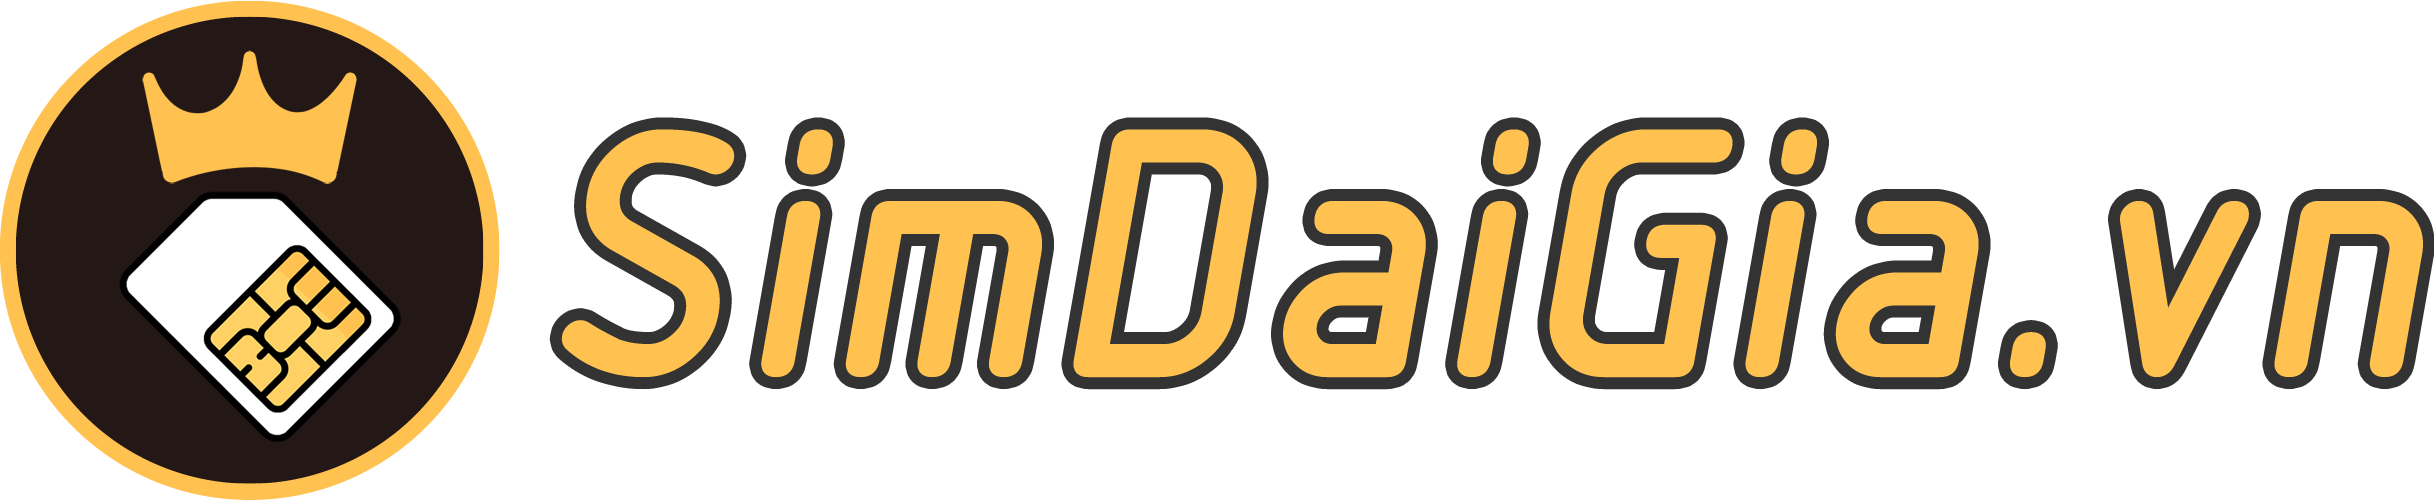 SimDaiGia.vn logo